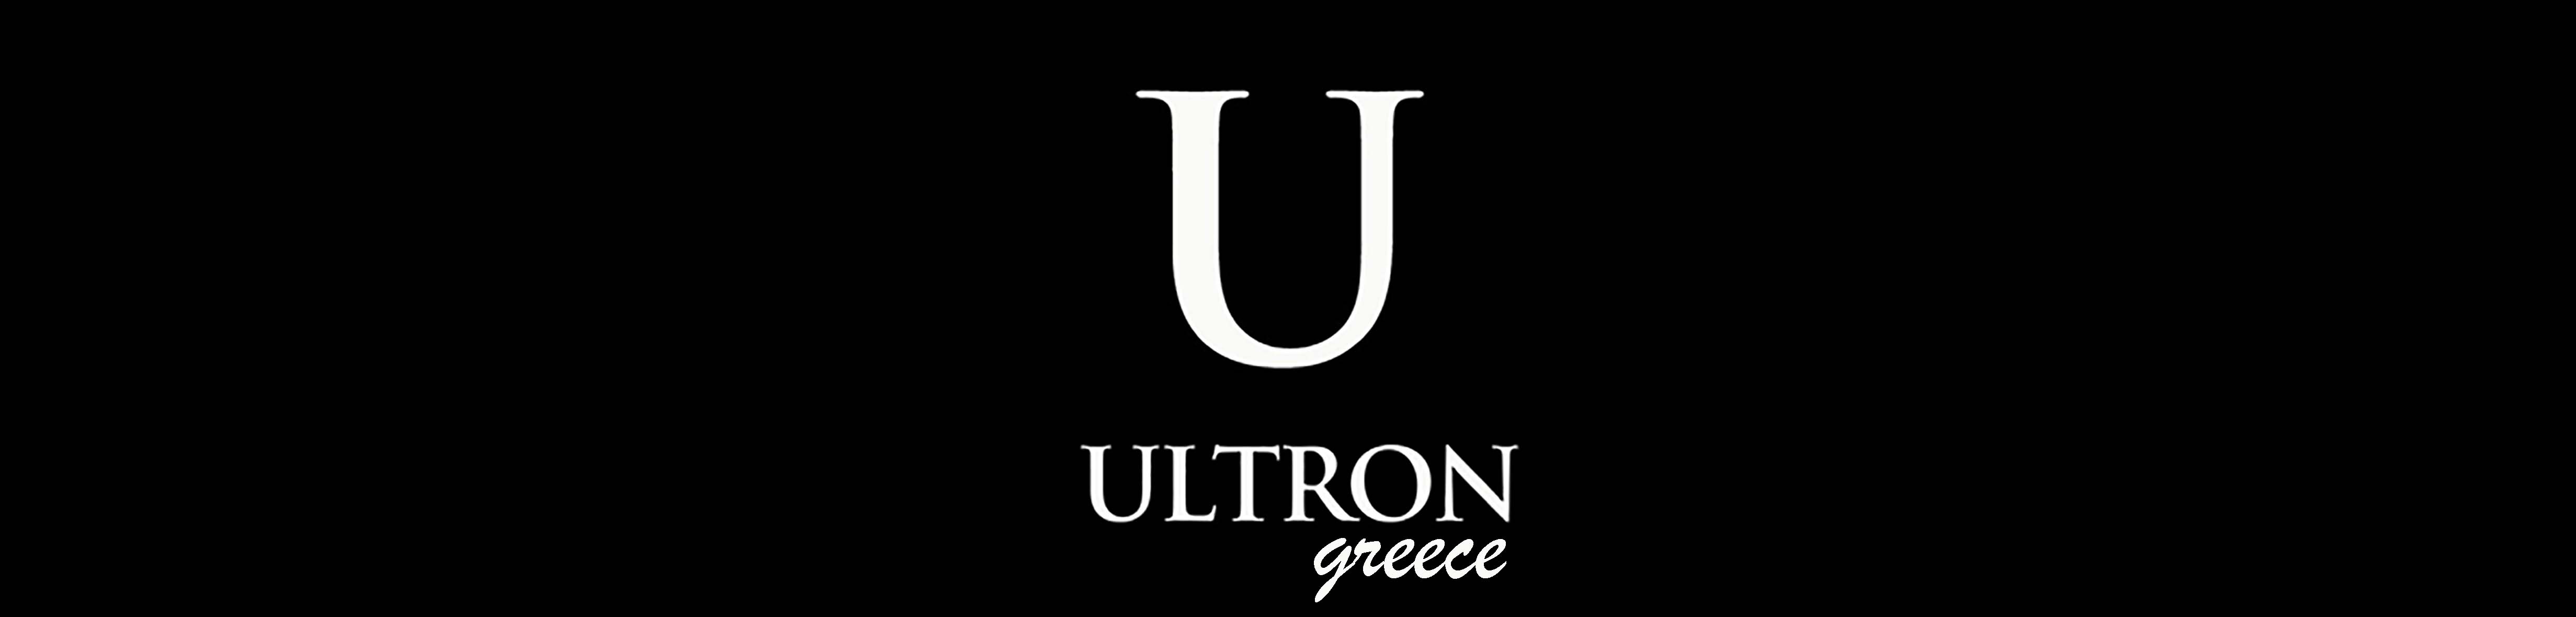 4) Local_Slider_1--Ultron greece Logo